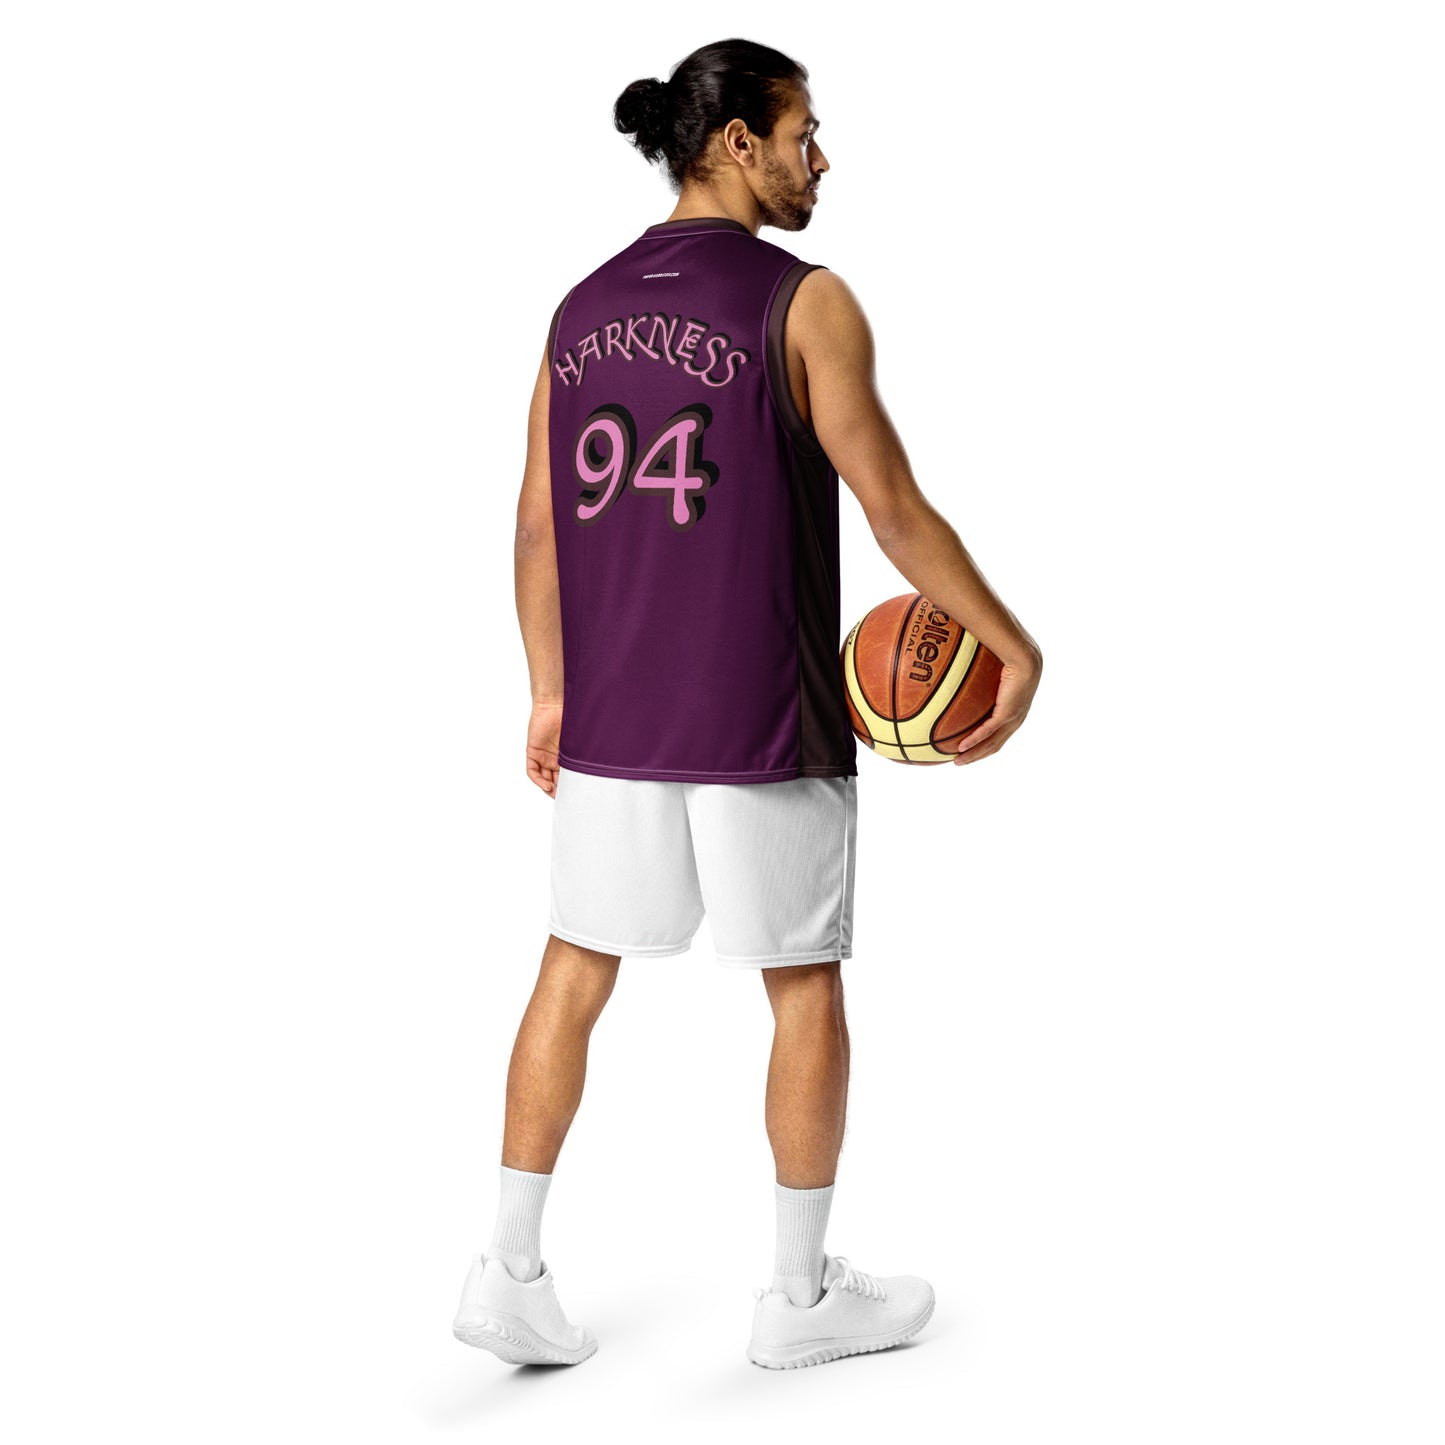 Agatha Harkness Basketball Jersey